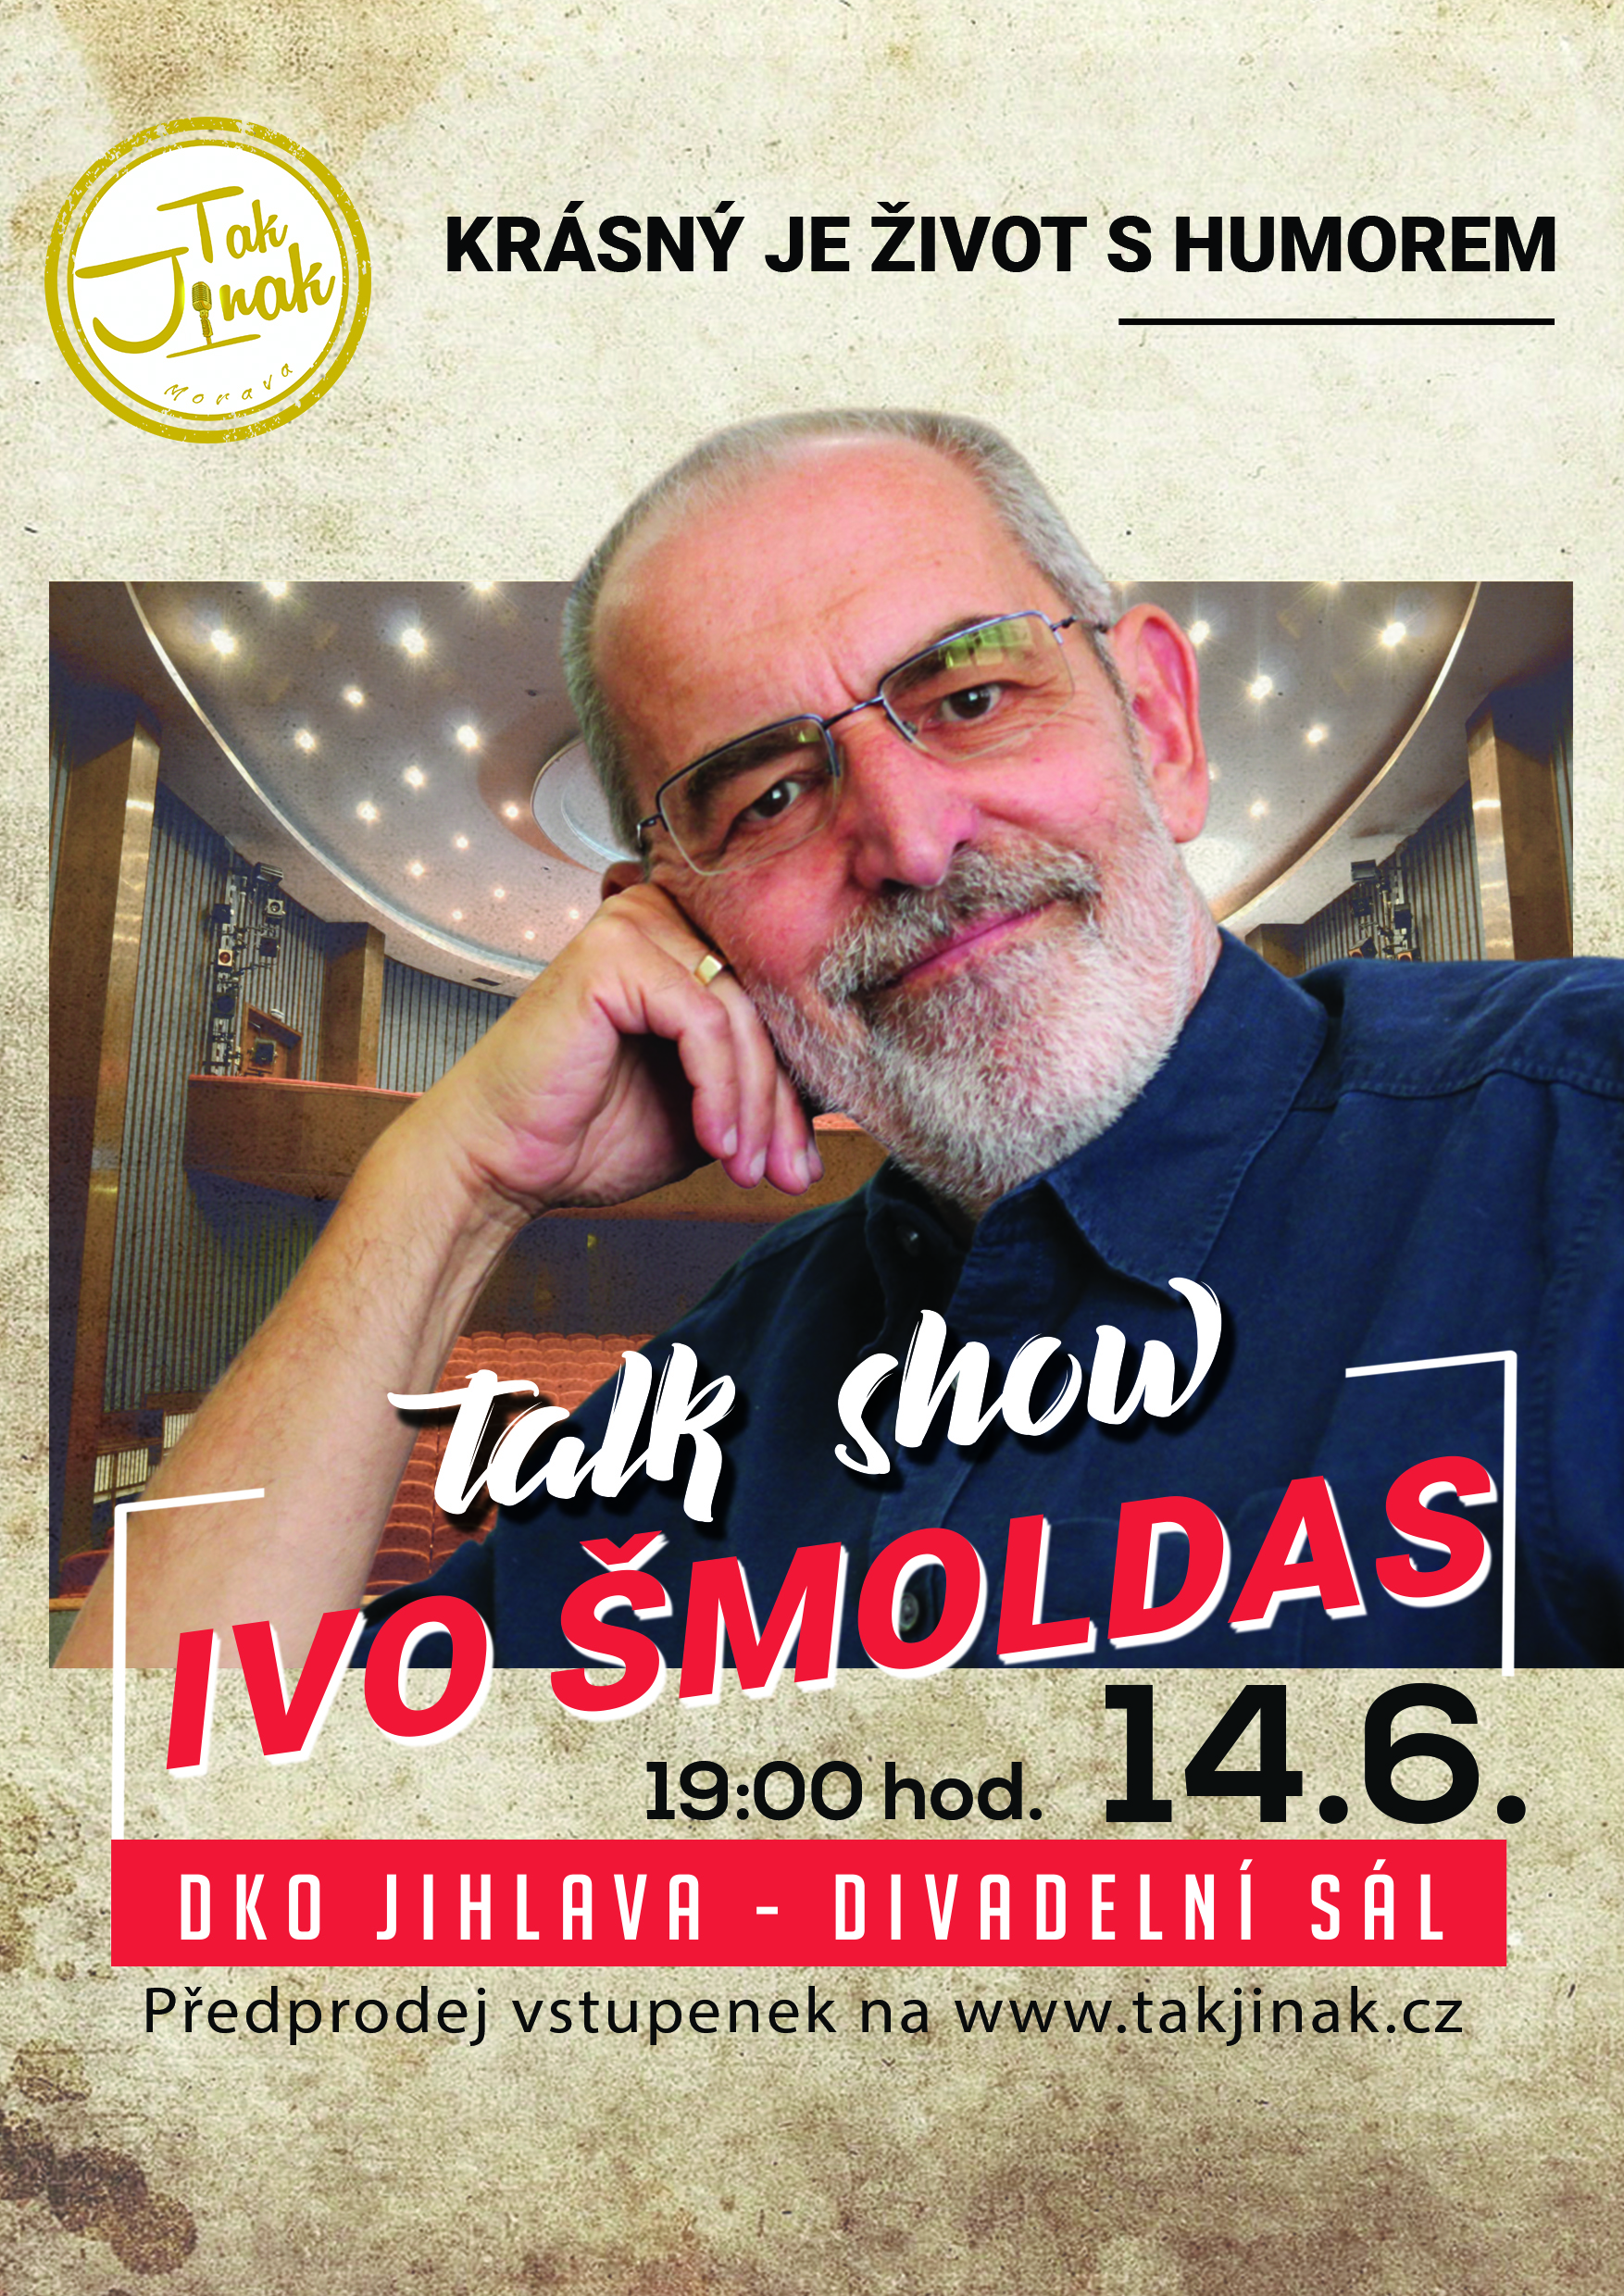 TALK SHOW IVO ŠMOLDASE 